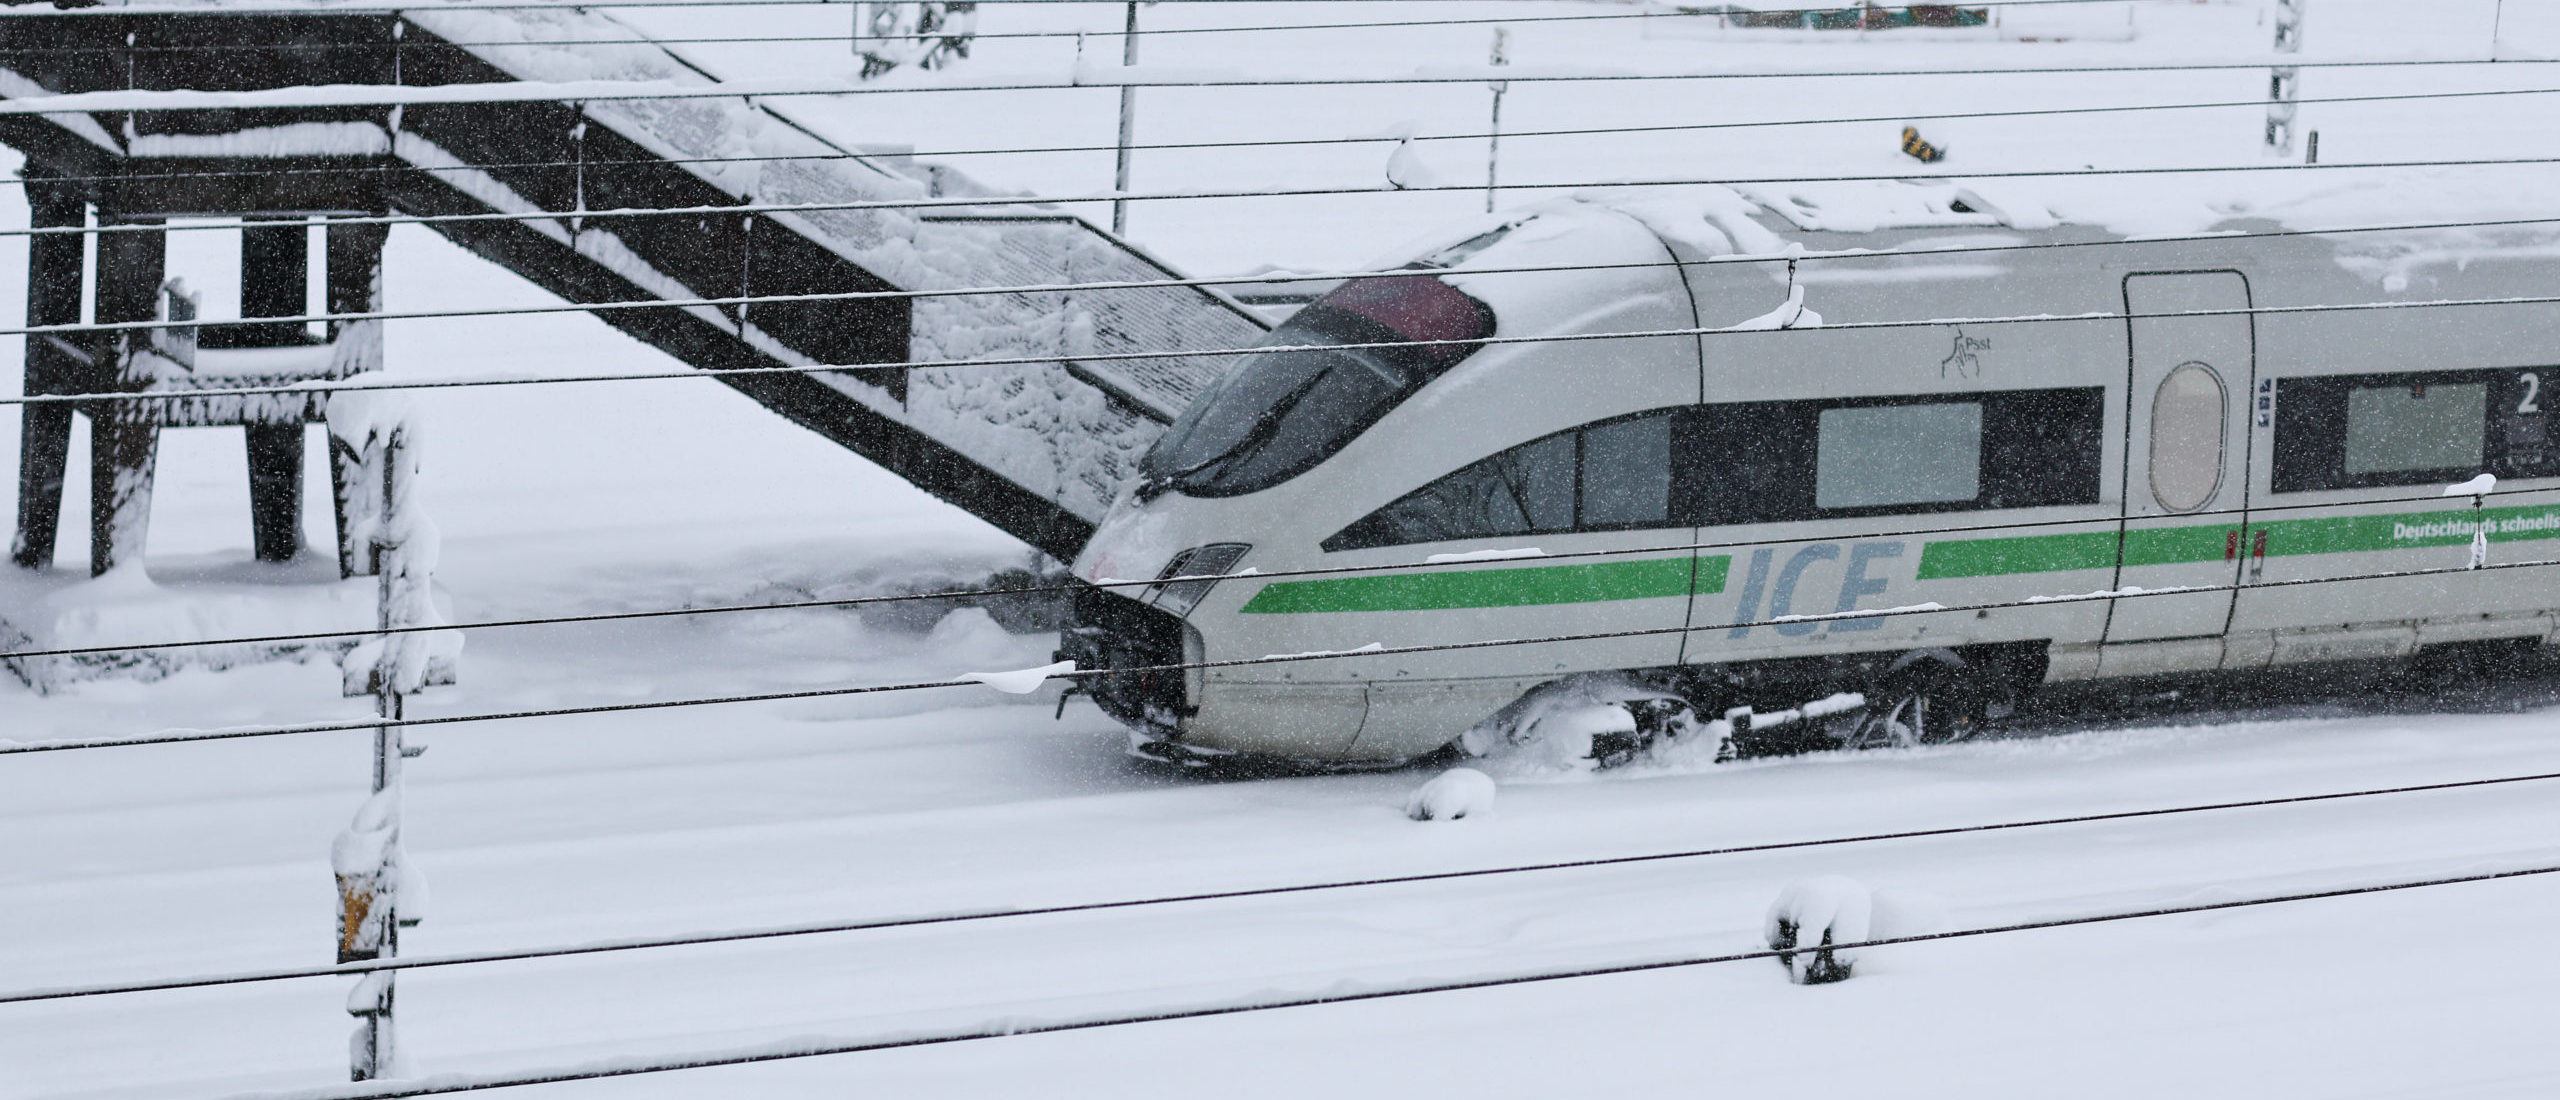 515 Hospitalized, 102 Suffer Broken Bones In Chinese Subway Train Wreck